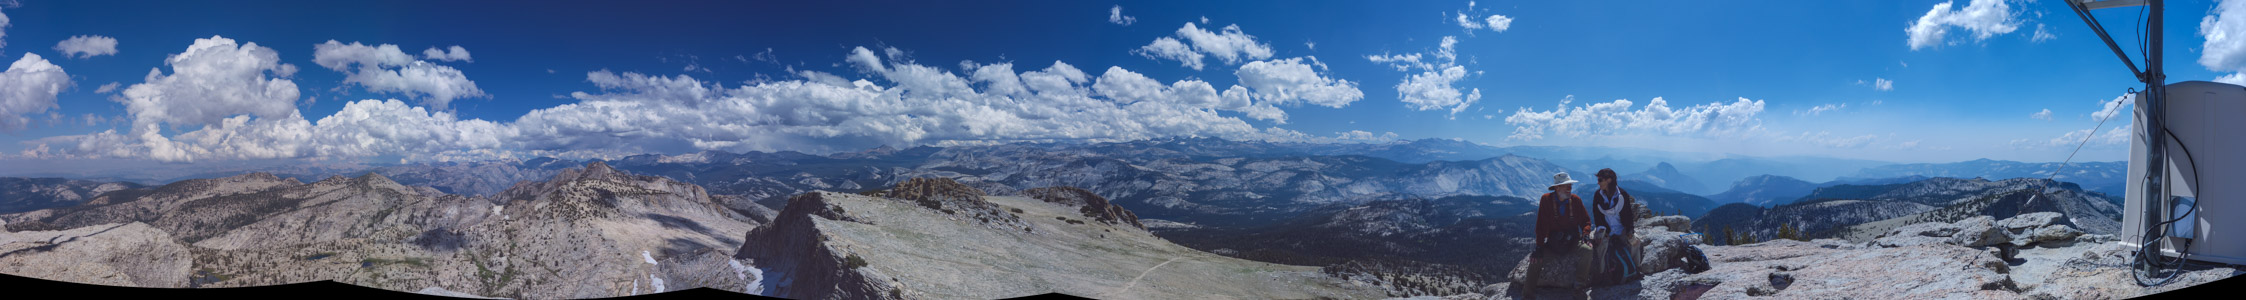 Mount Hoffman summit panorama - 9/2017